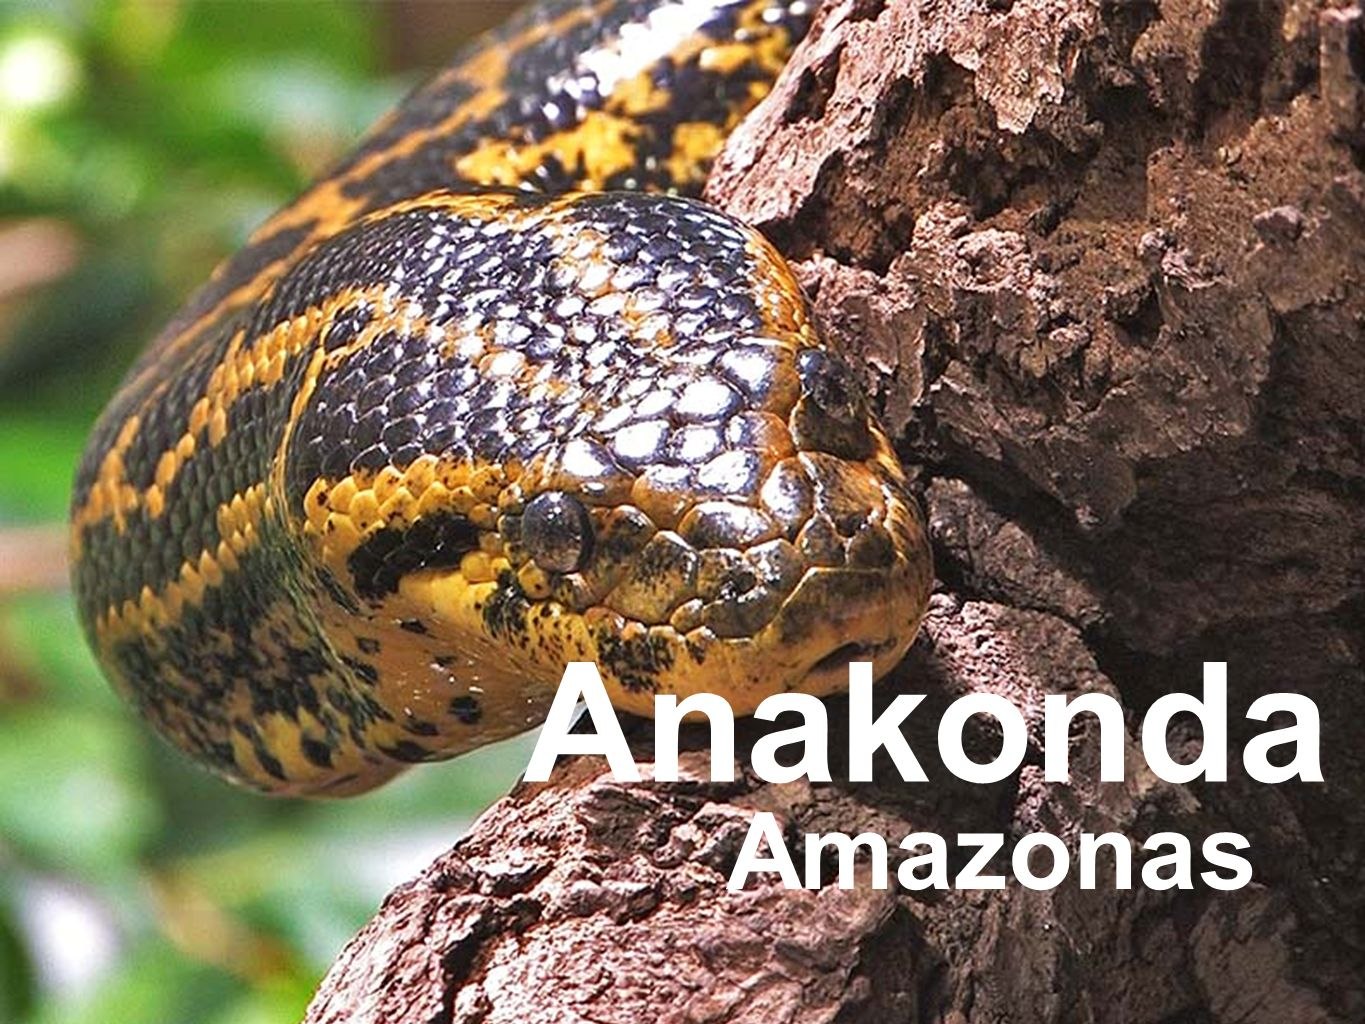 Почему анаконда. Анаконда змея. Анаконда eunectes murinus. Змея Anaconda. Река Амазонка змея Анаконда.